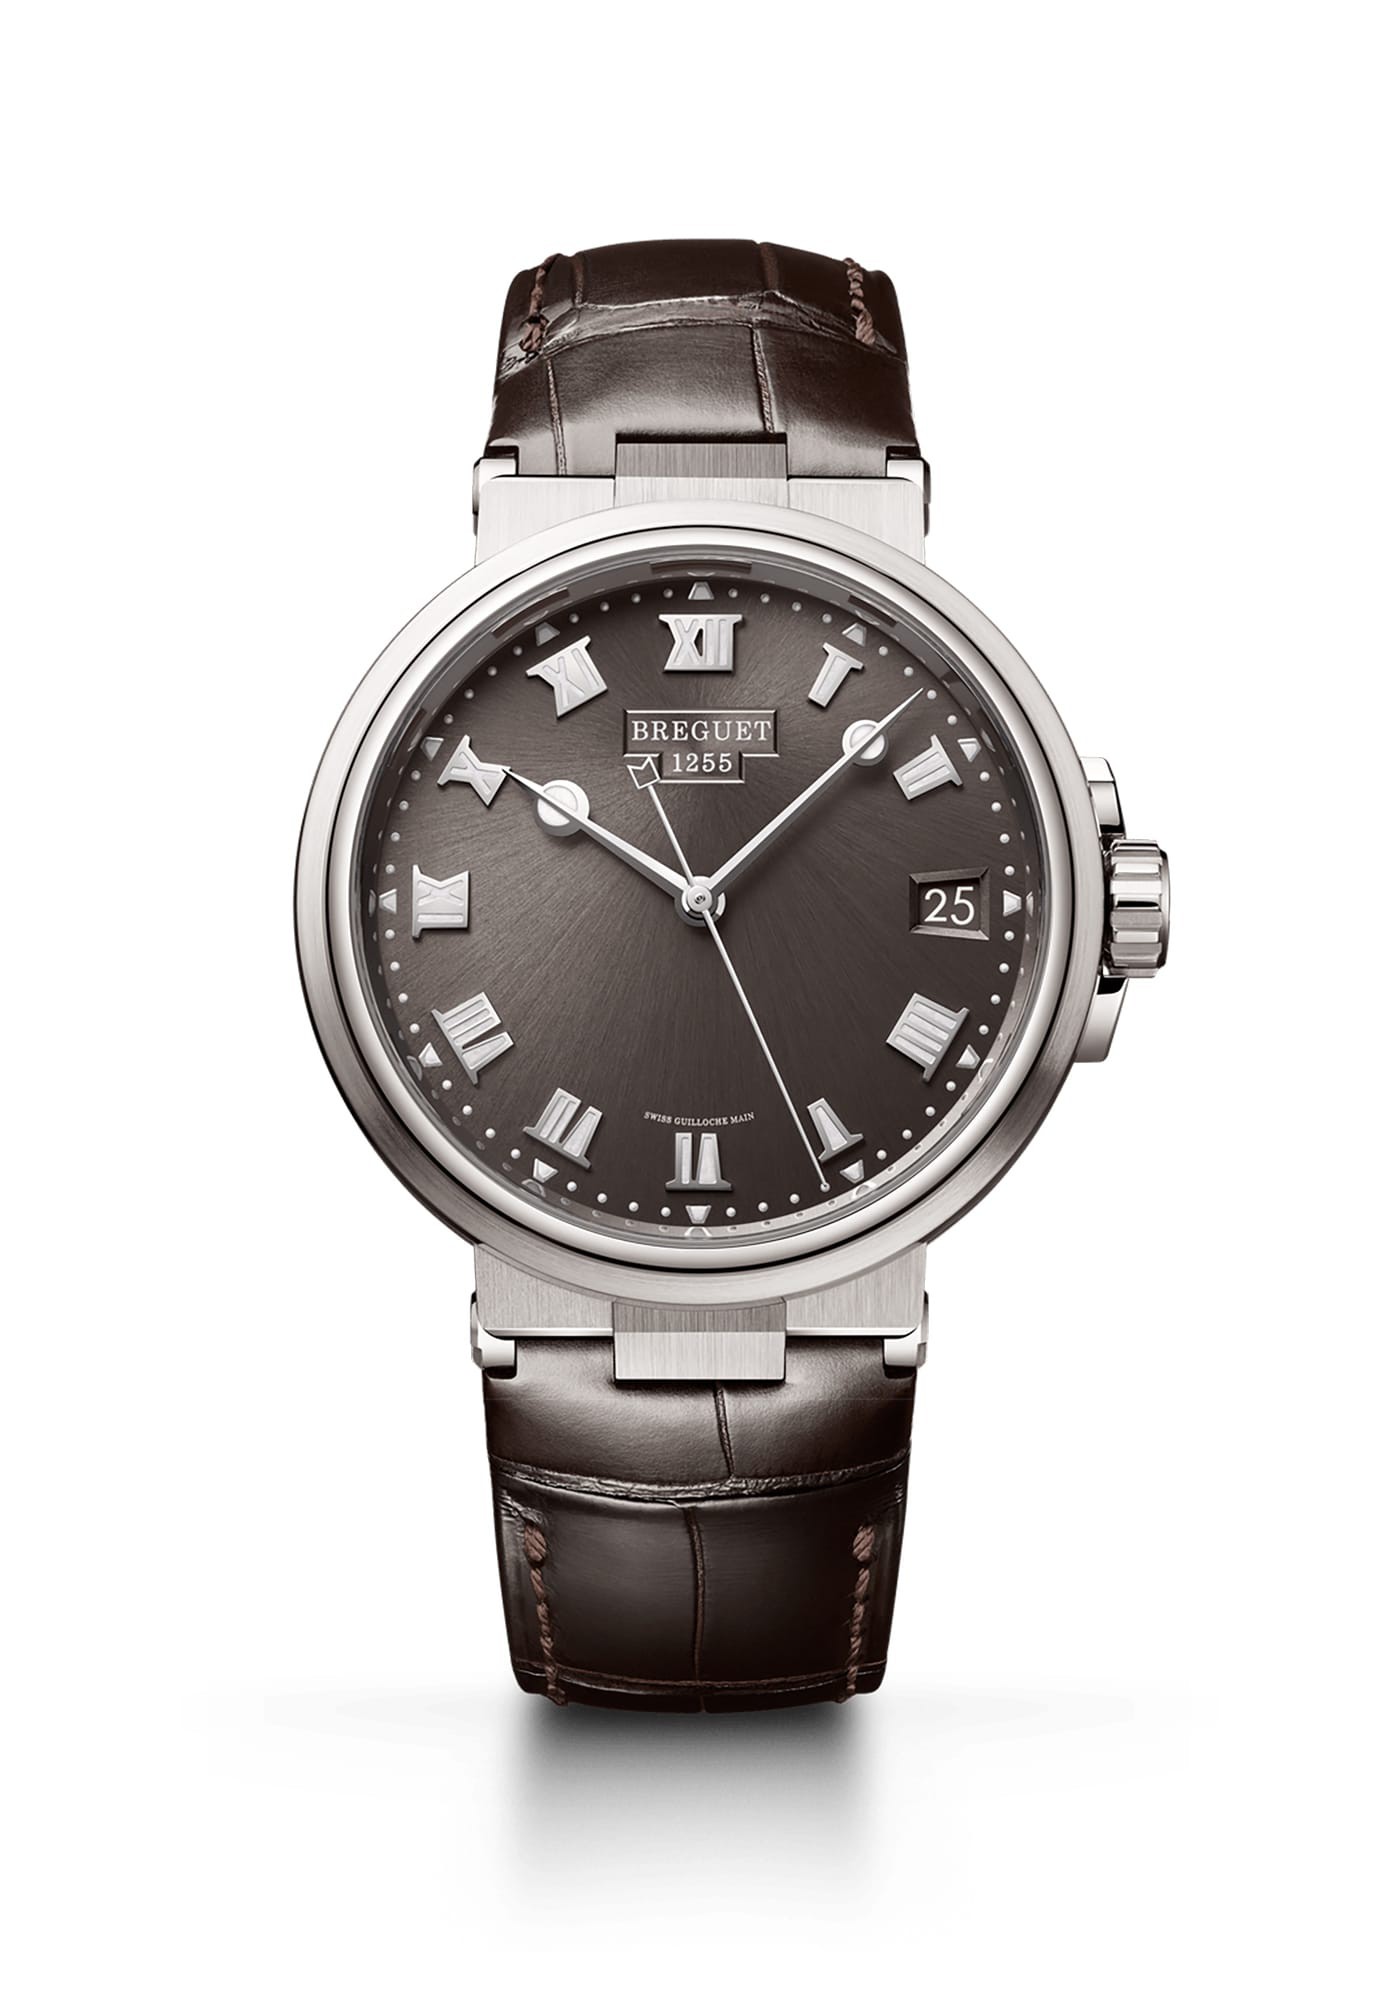 Breguet Marine 5517 watch